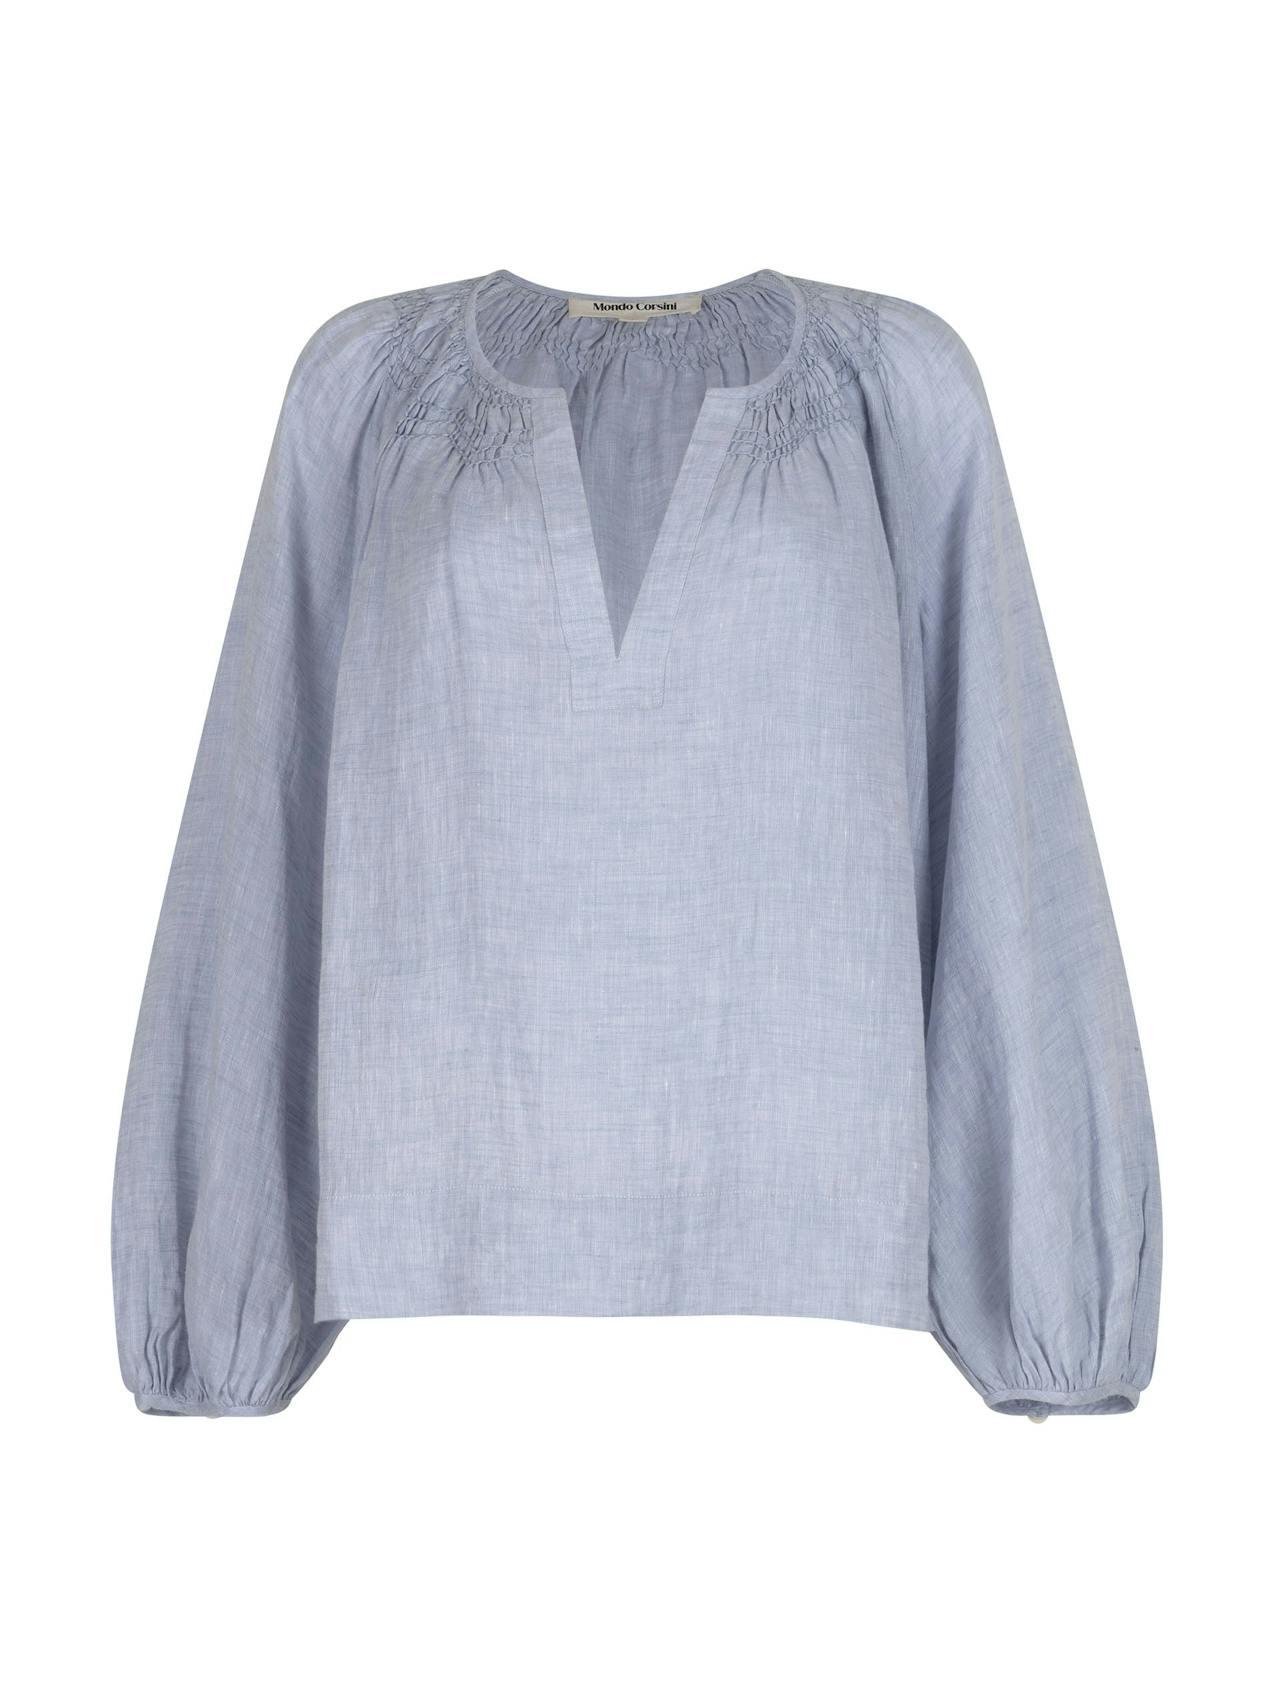 Elizabeth sky linen blouse